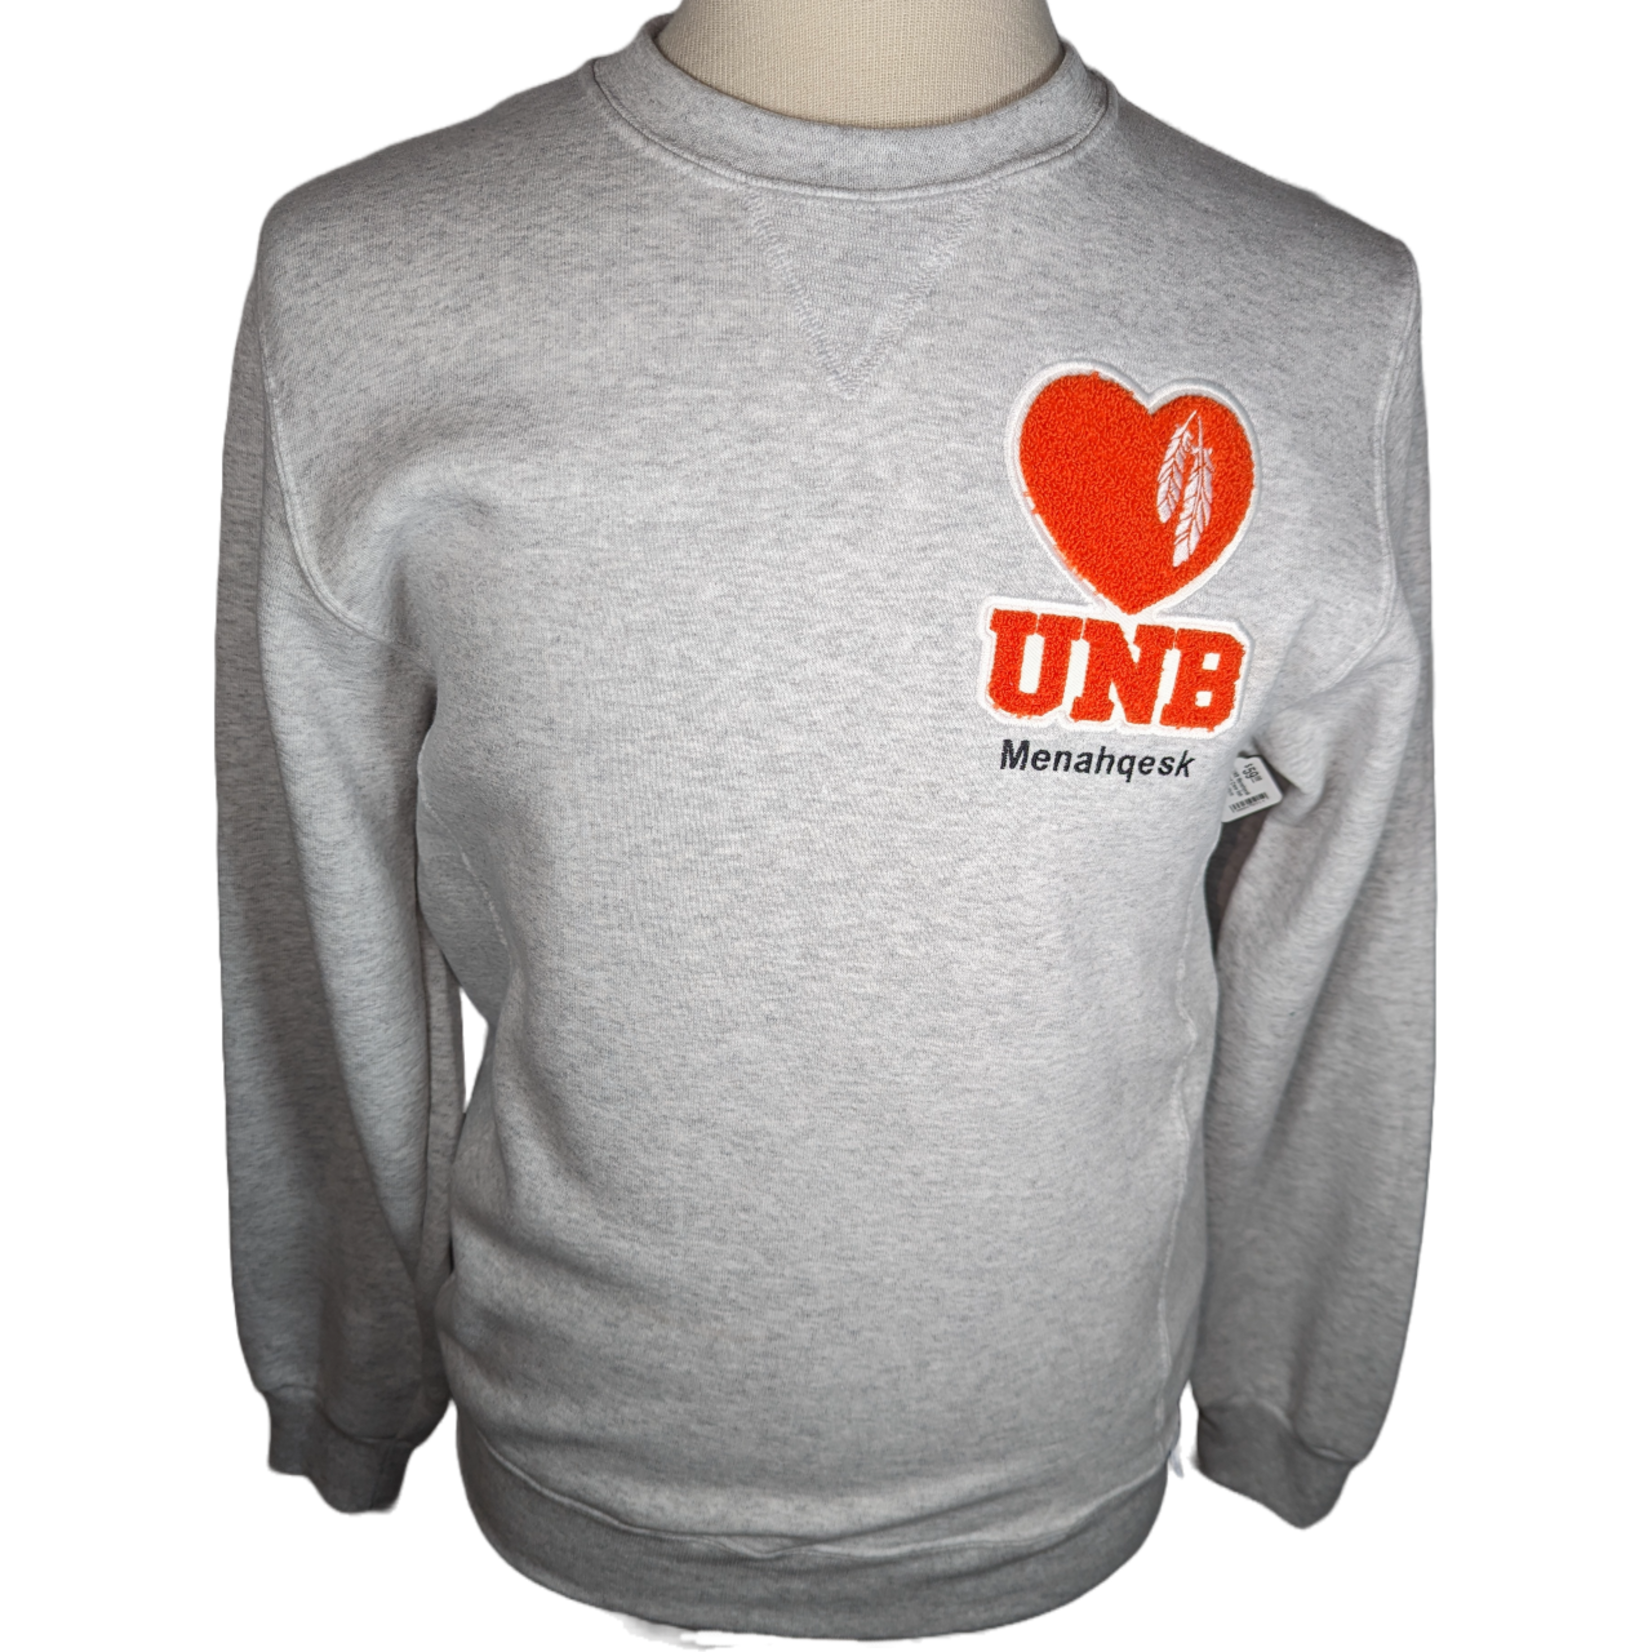 UNB Menahqesk Heart Crewneck Sweater